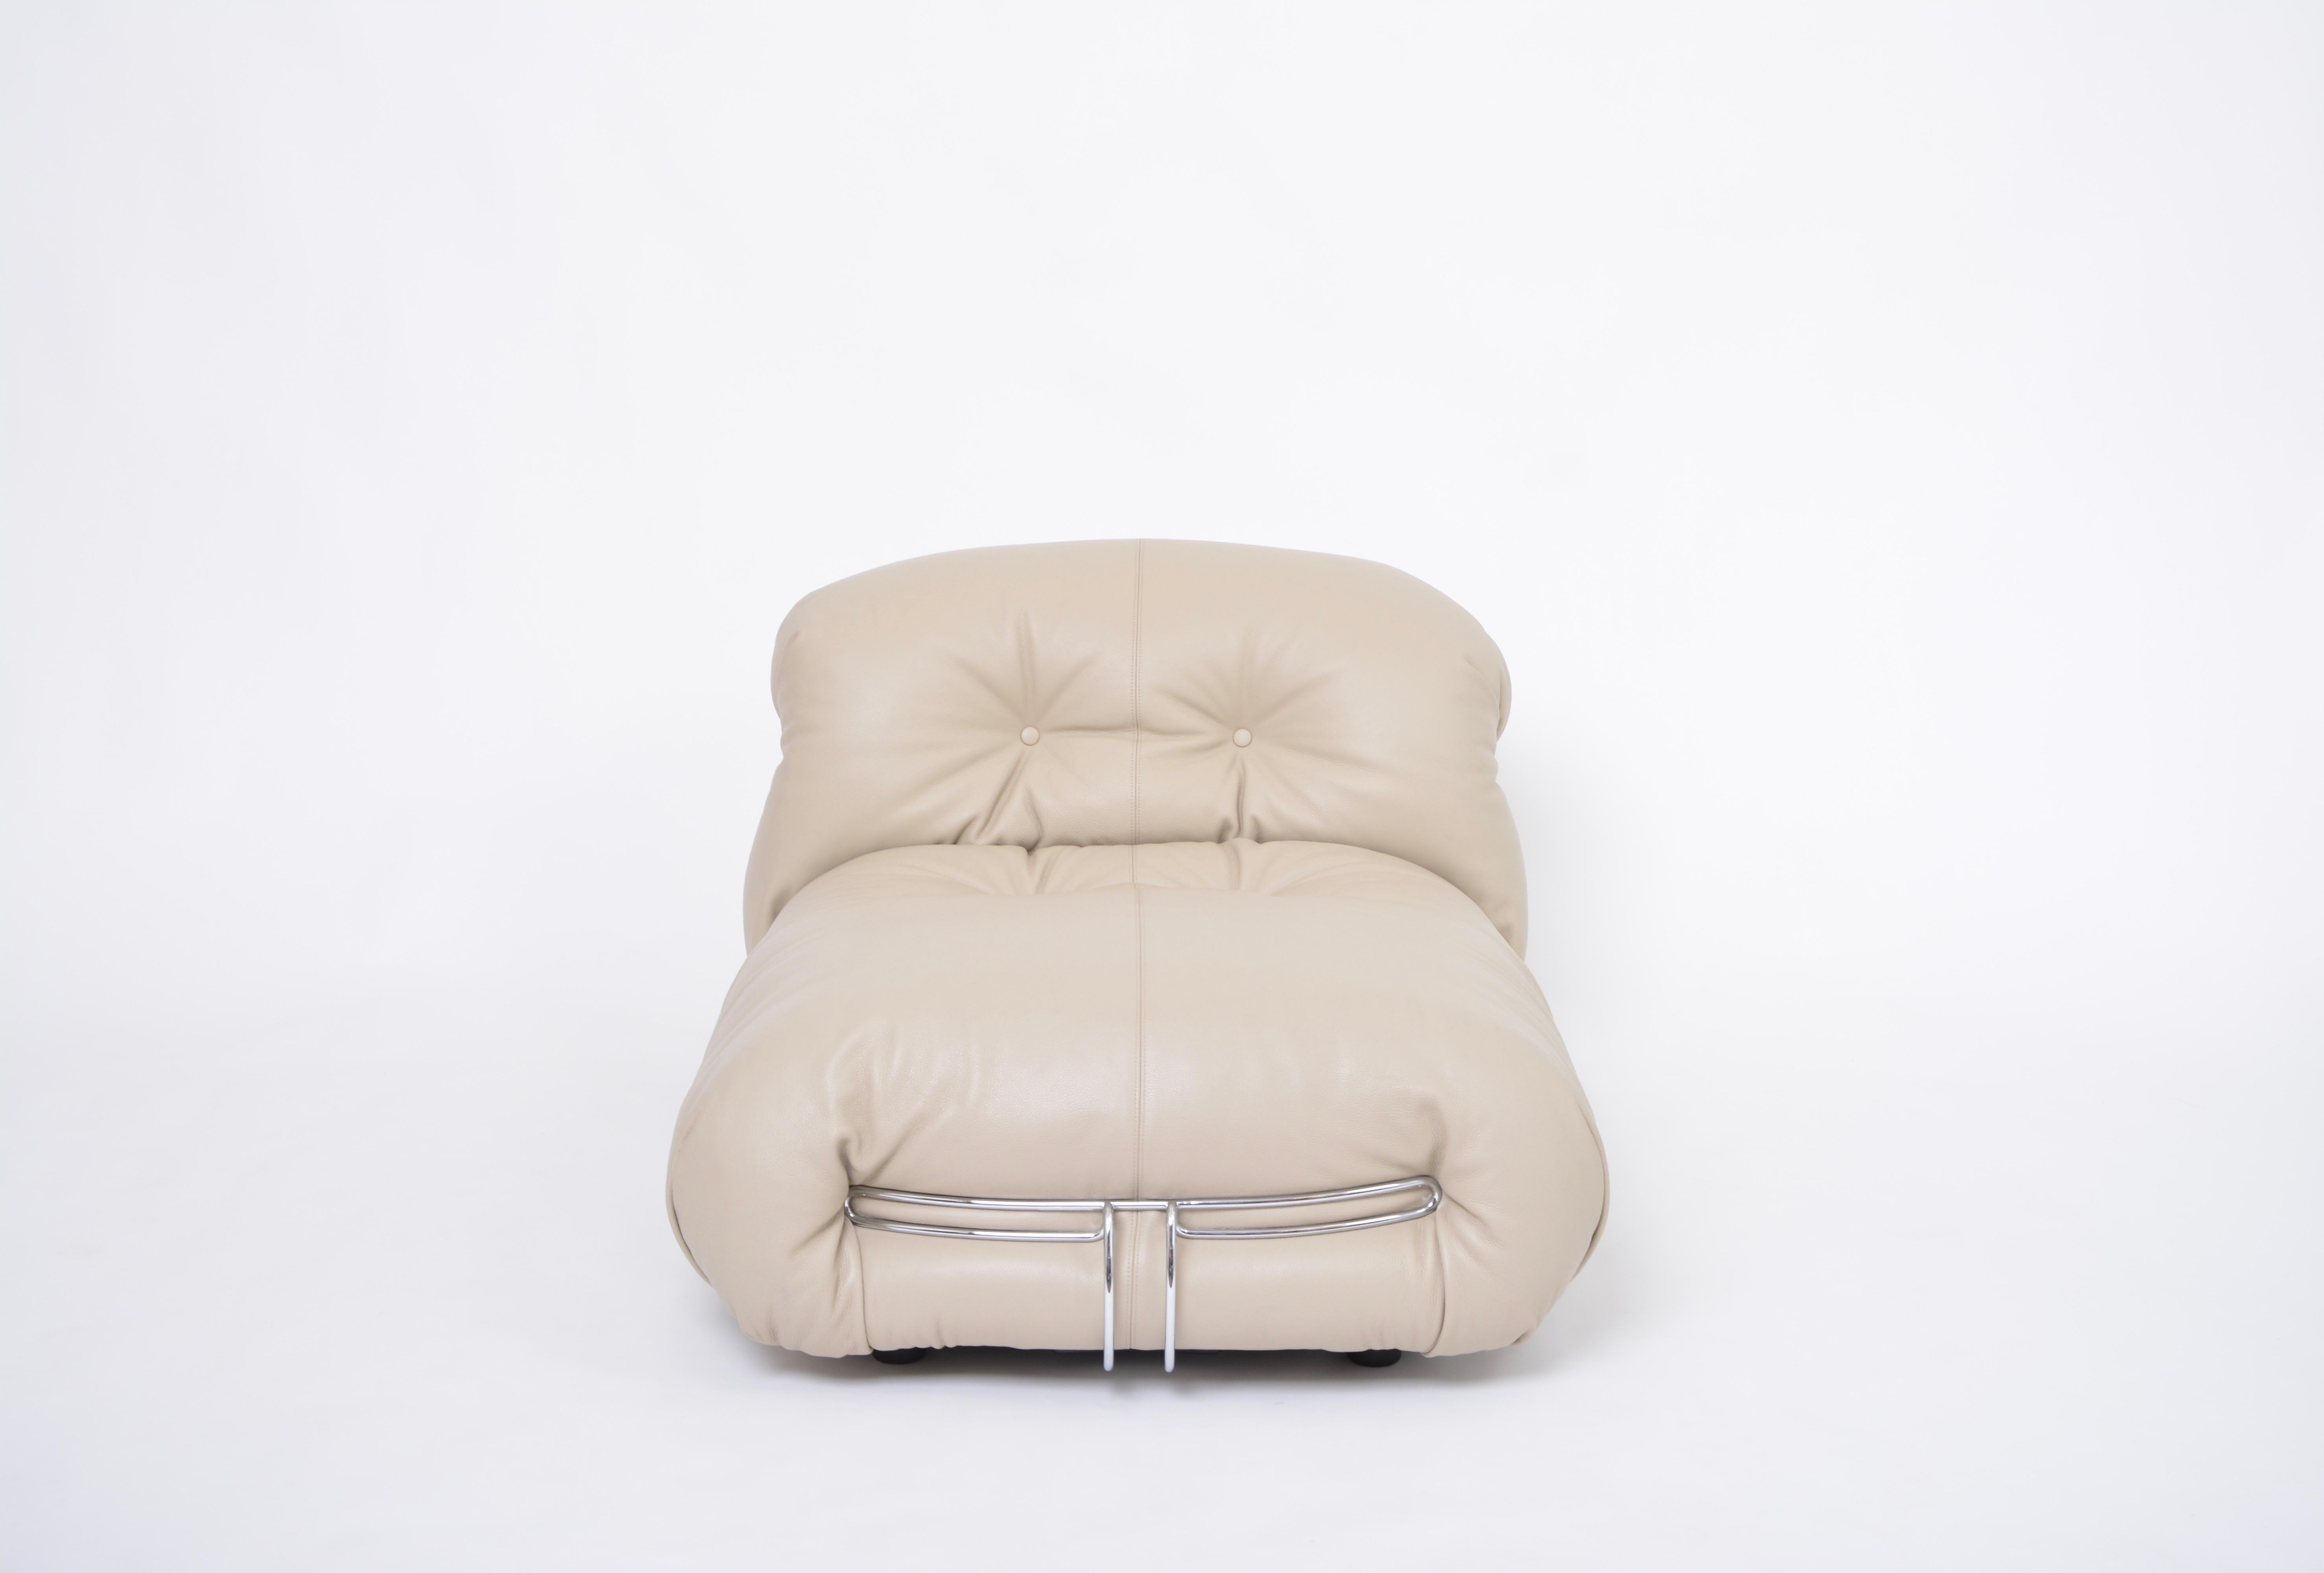 Afra & Tobia Scarpa 'Soriana' Chaise Lounge Stuhl aus grauem Leder (20. Jahrhundert) im Angebot